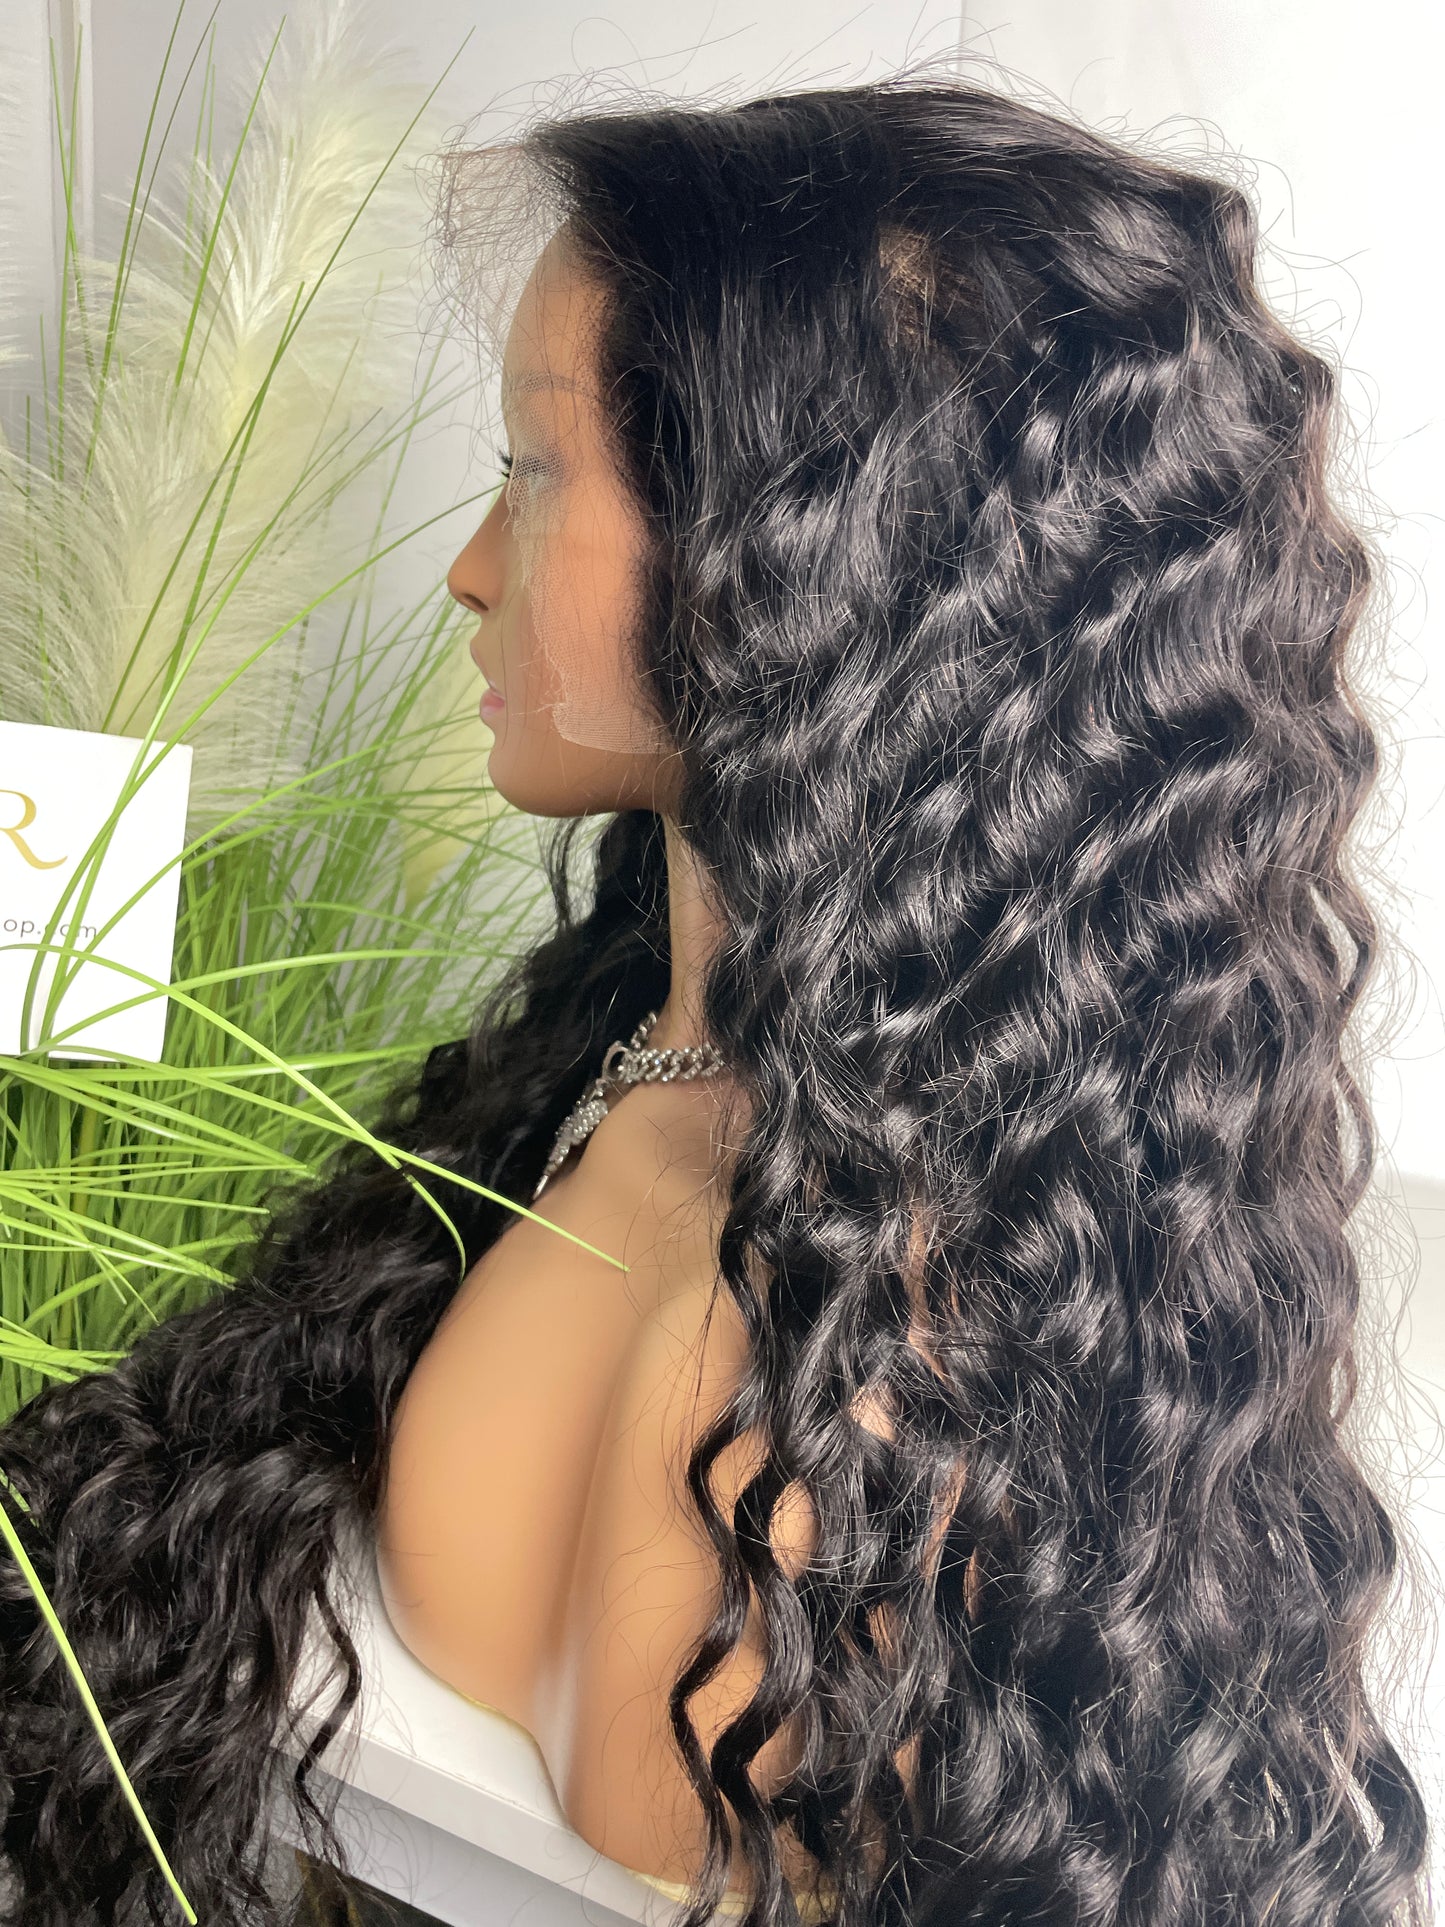 Burmese Virgin Hair 13x4 13x6 HD Full Frontal Wig - Loose Curly #1B